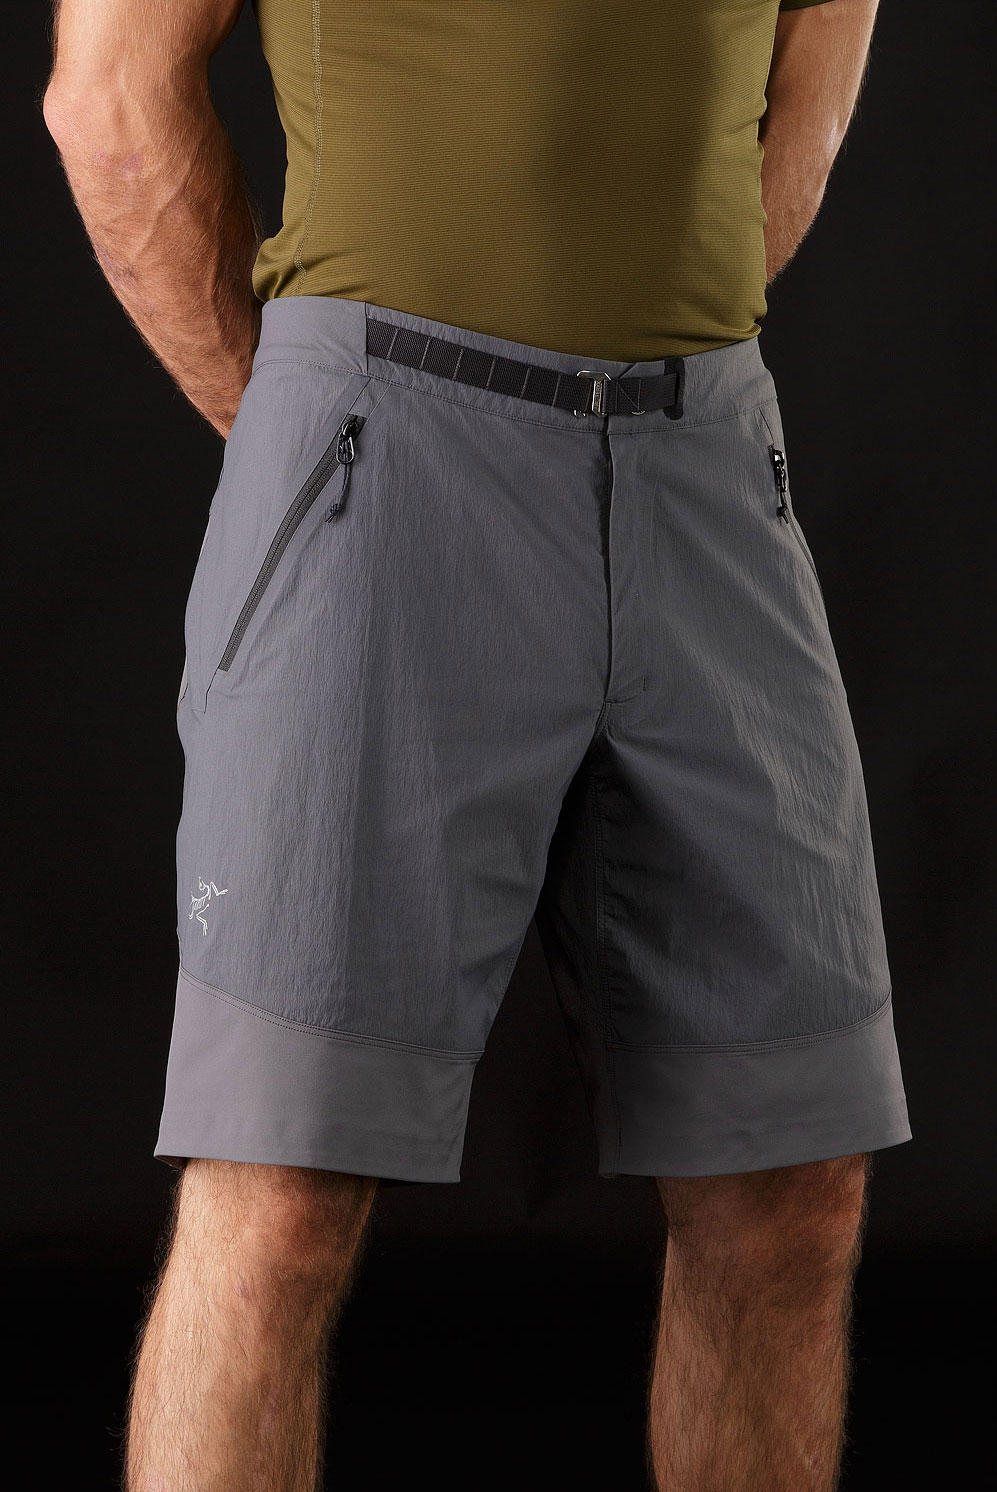 Arc'teryx Gamma SL Hybrid Short, men's, discontinued colors (free 